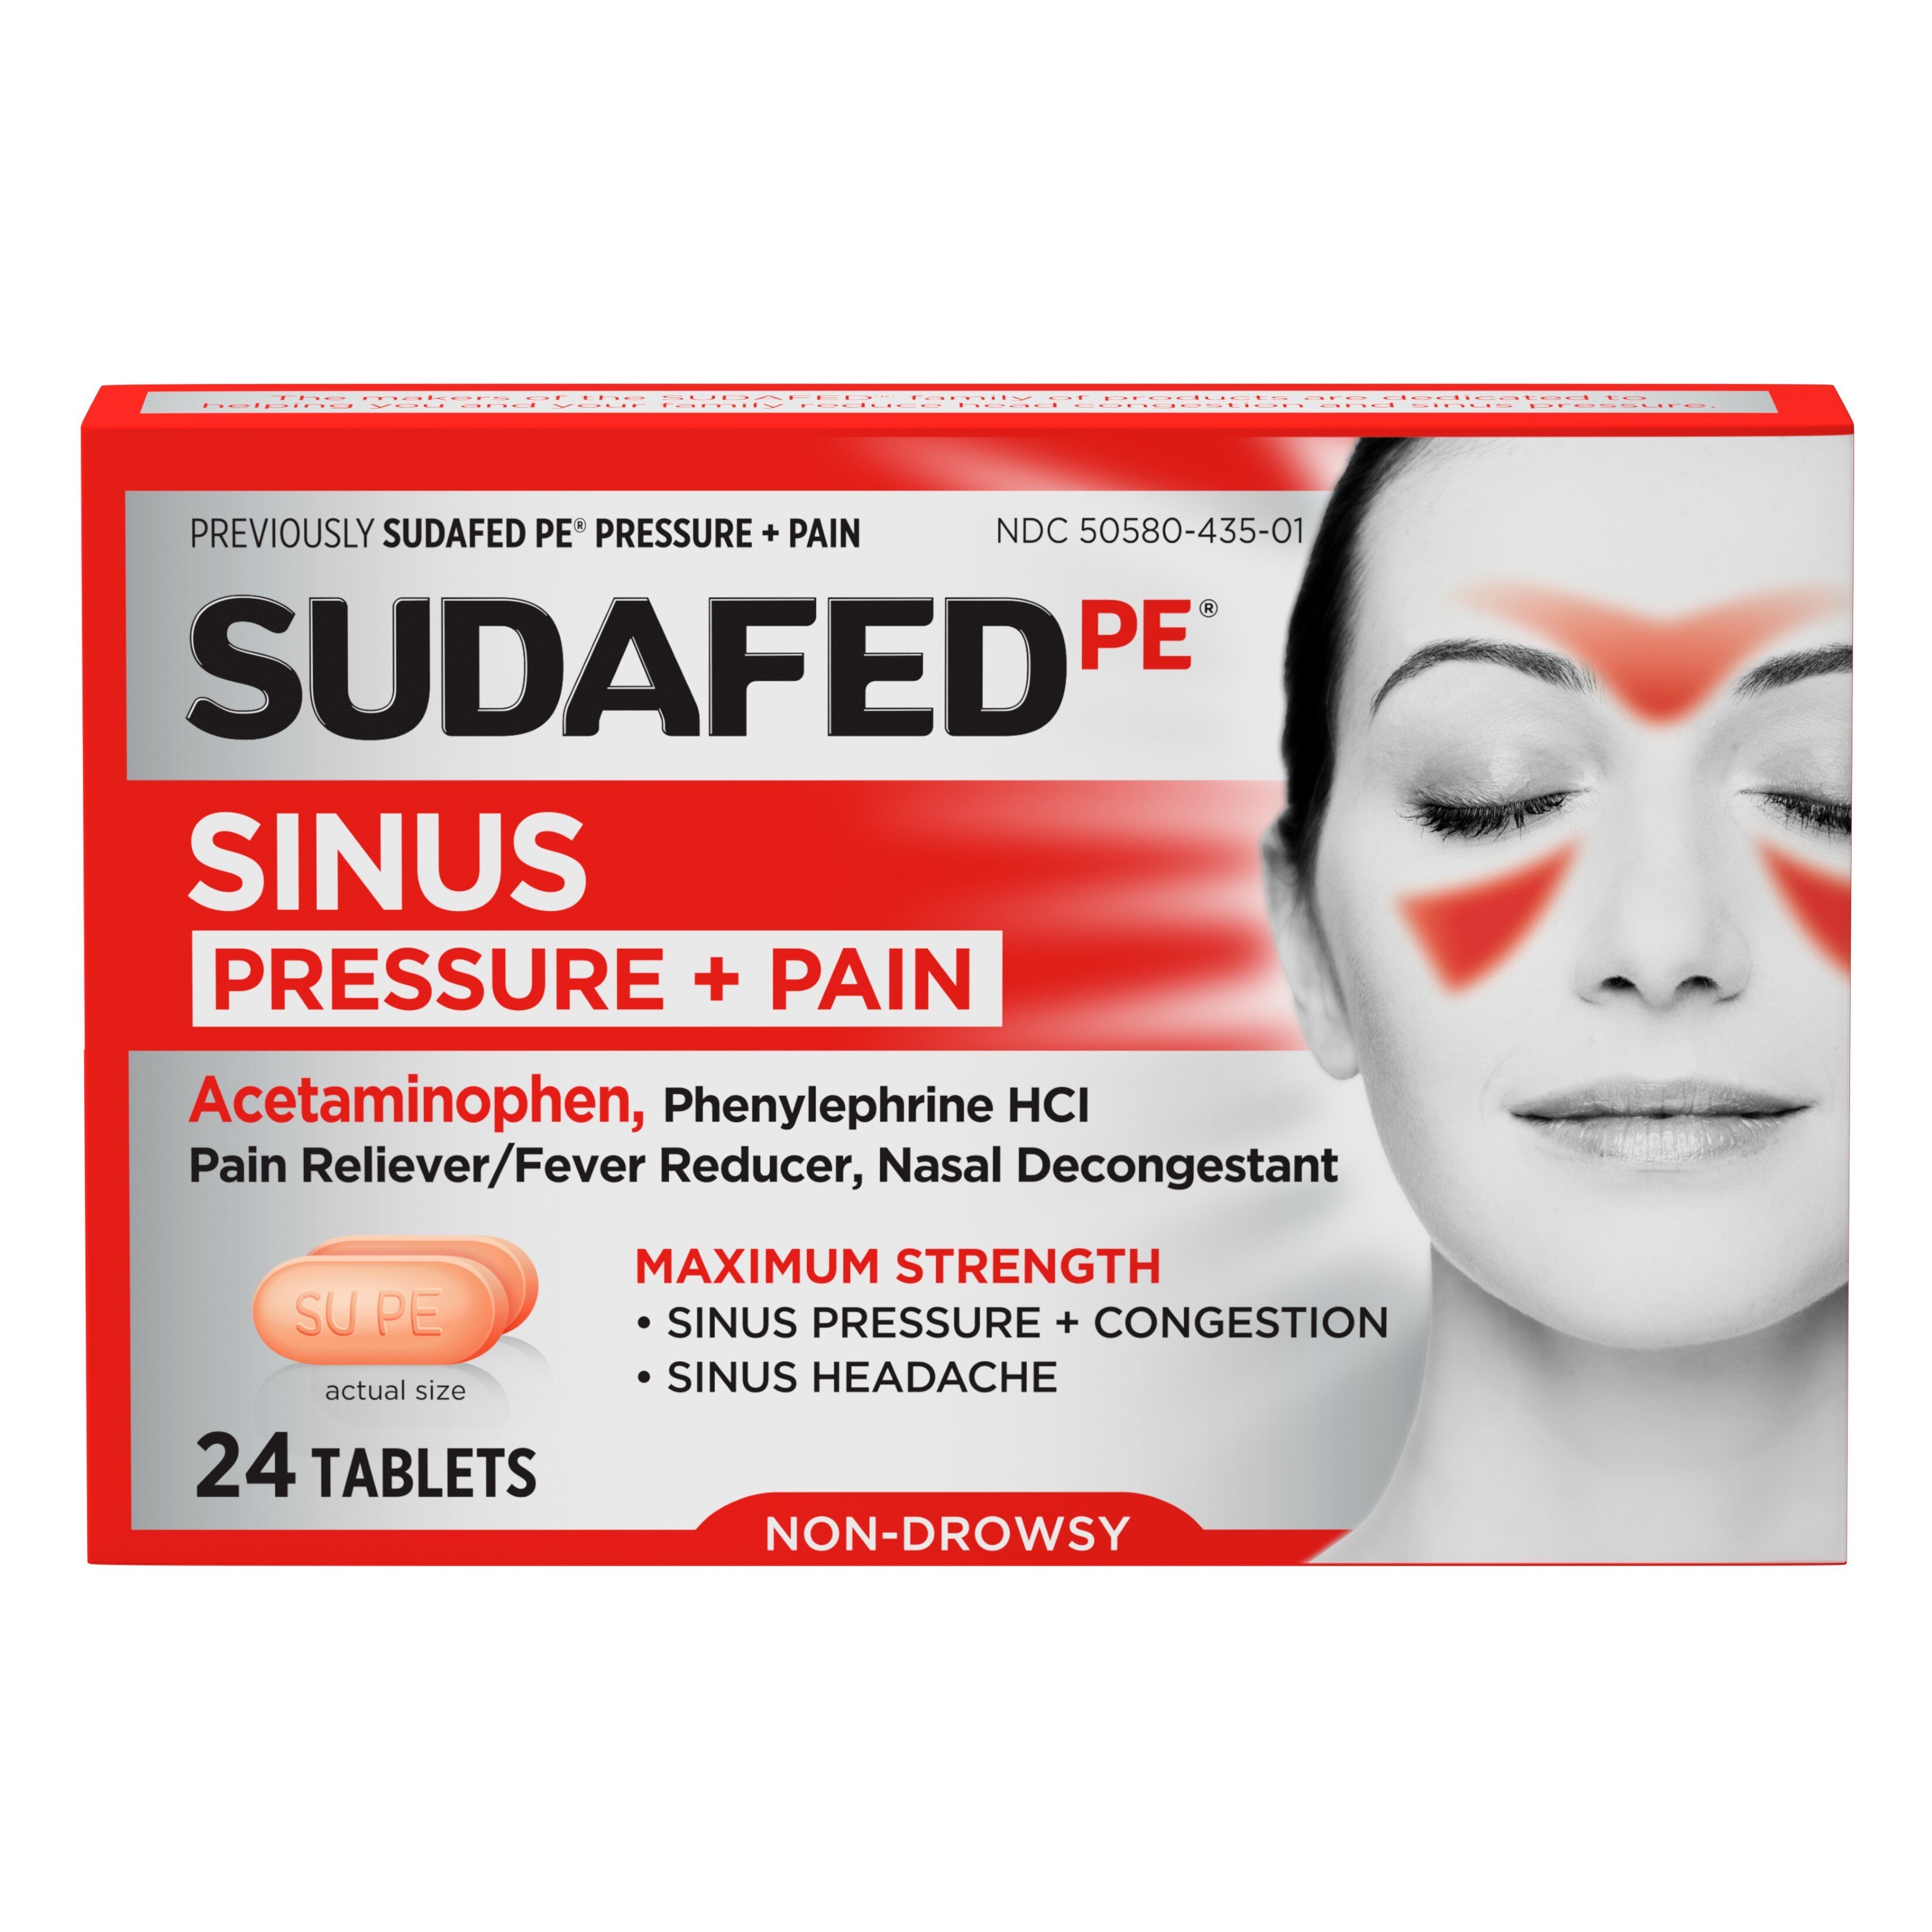 Sudafed PE Sinus Pressure + Pain Relief Decongestant Tablets, 24 CT